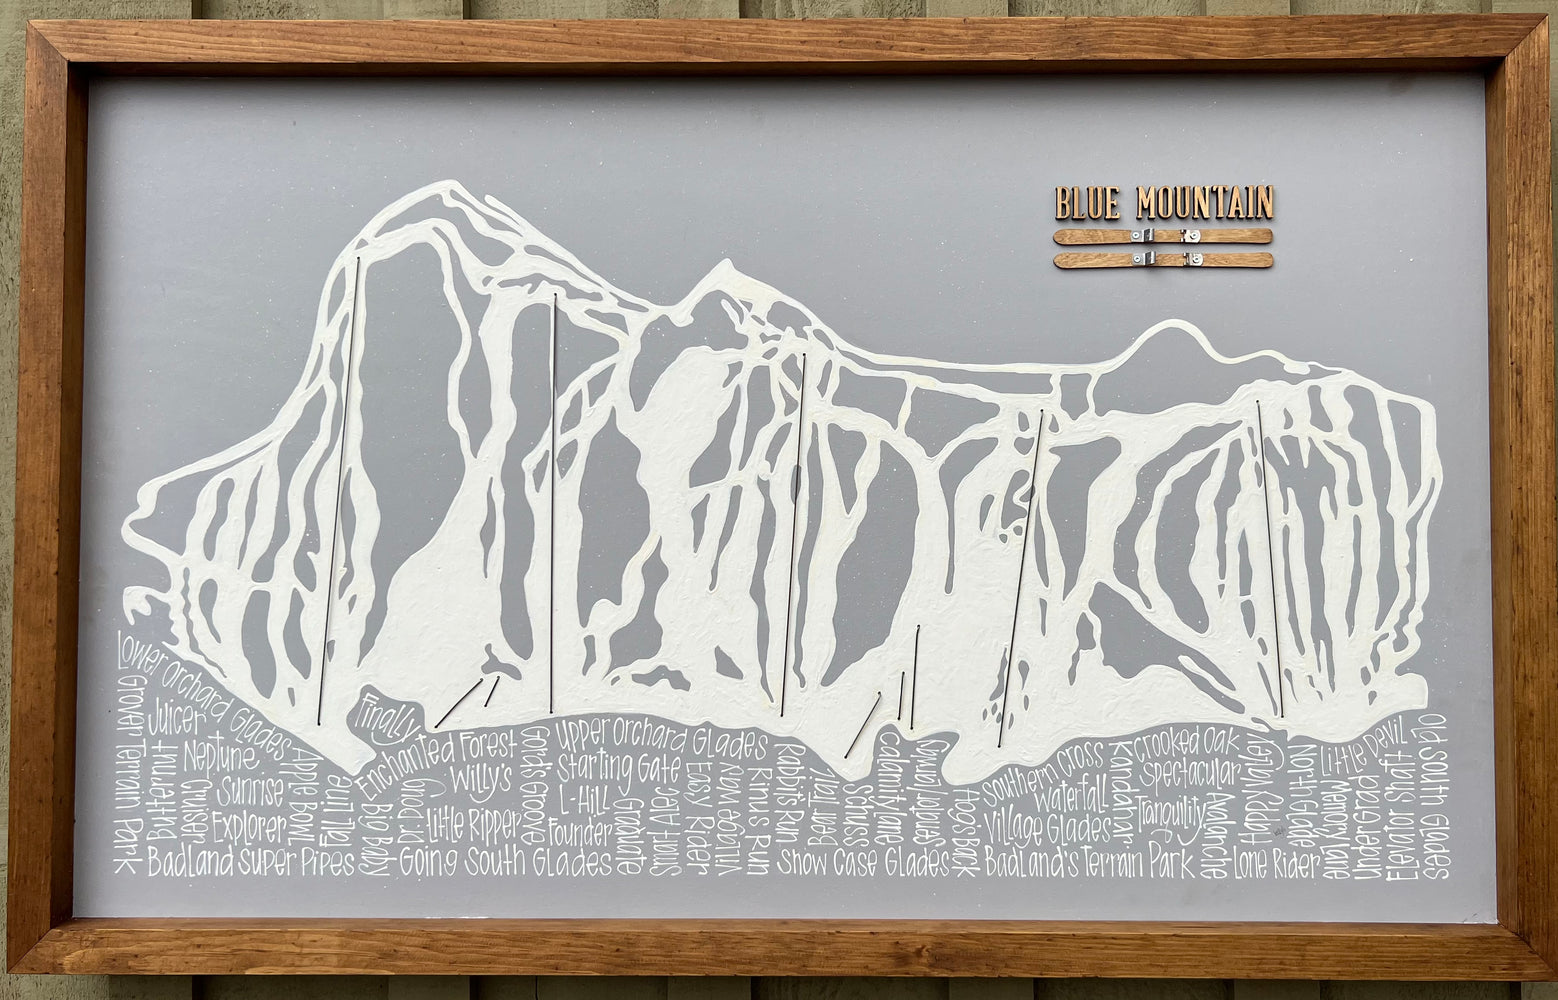 30"x48" Rustic Pine Frame - Ski Trail Map